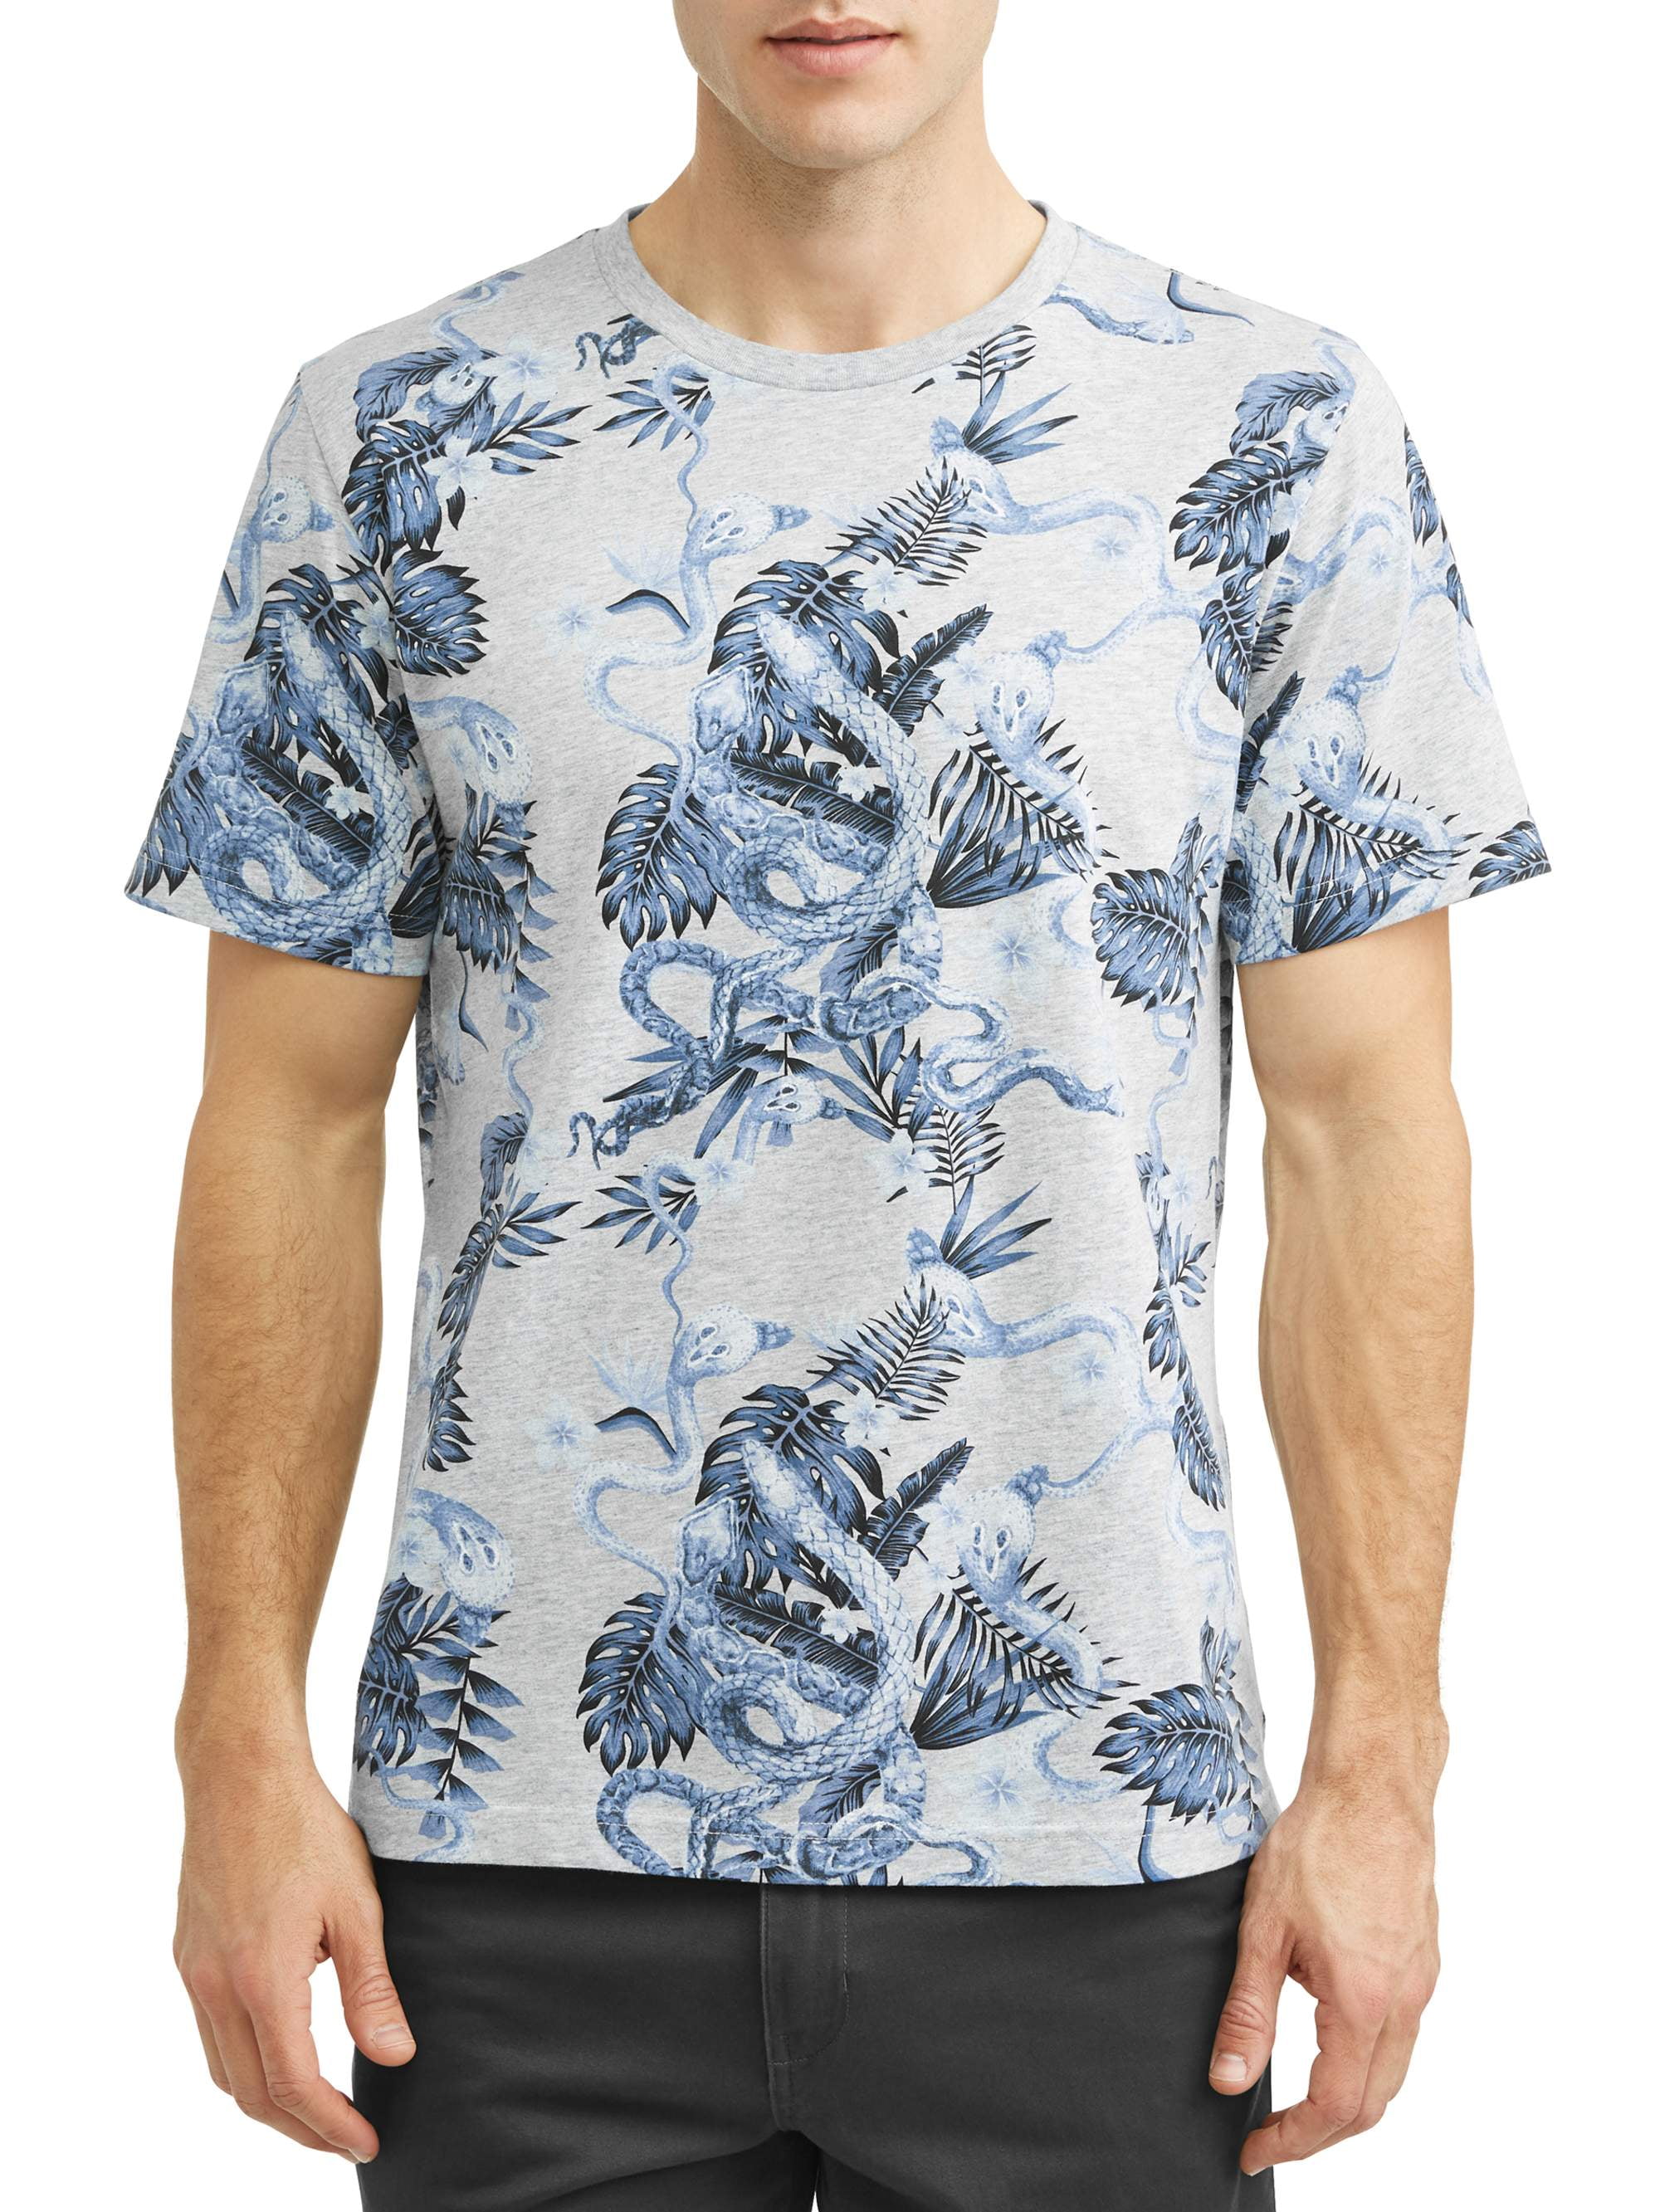 George Men's Printed T-Shirt - Walmart.com